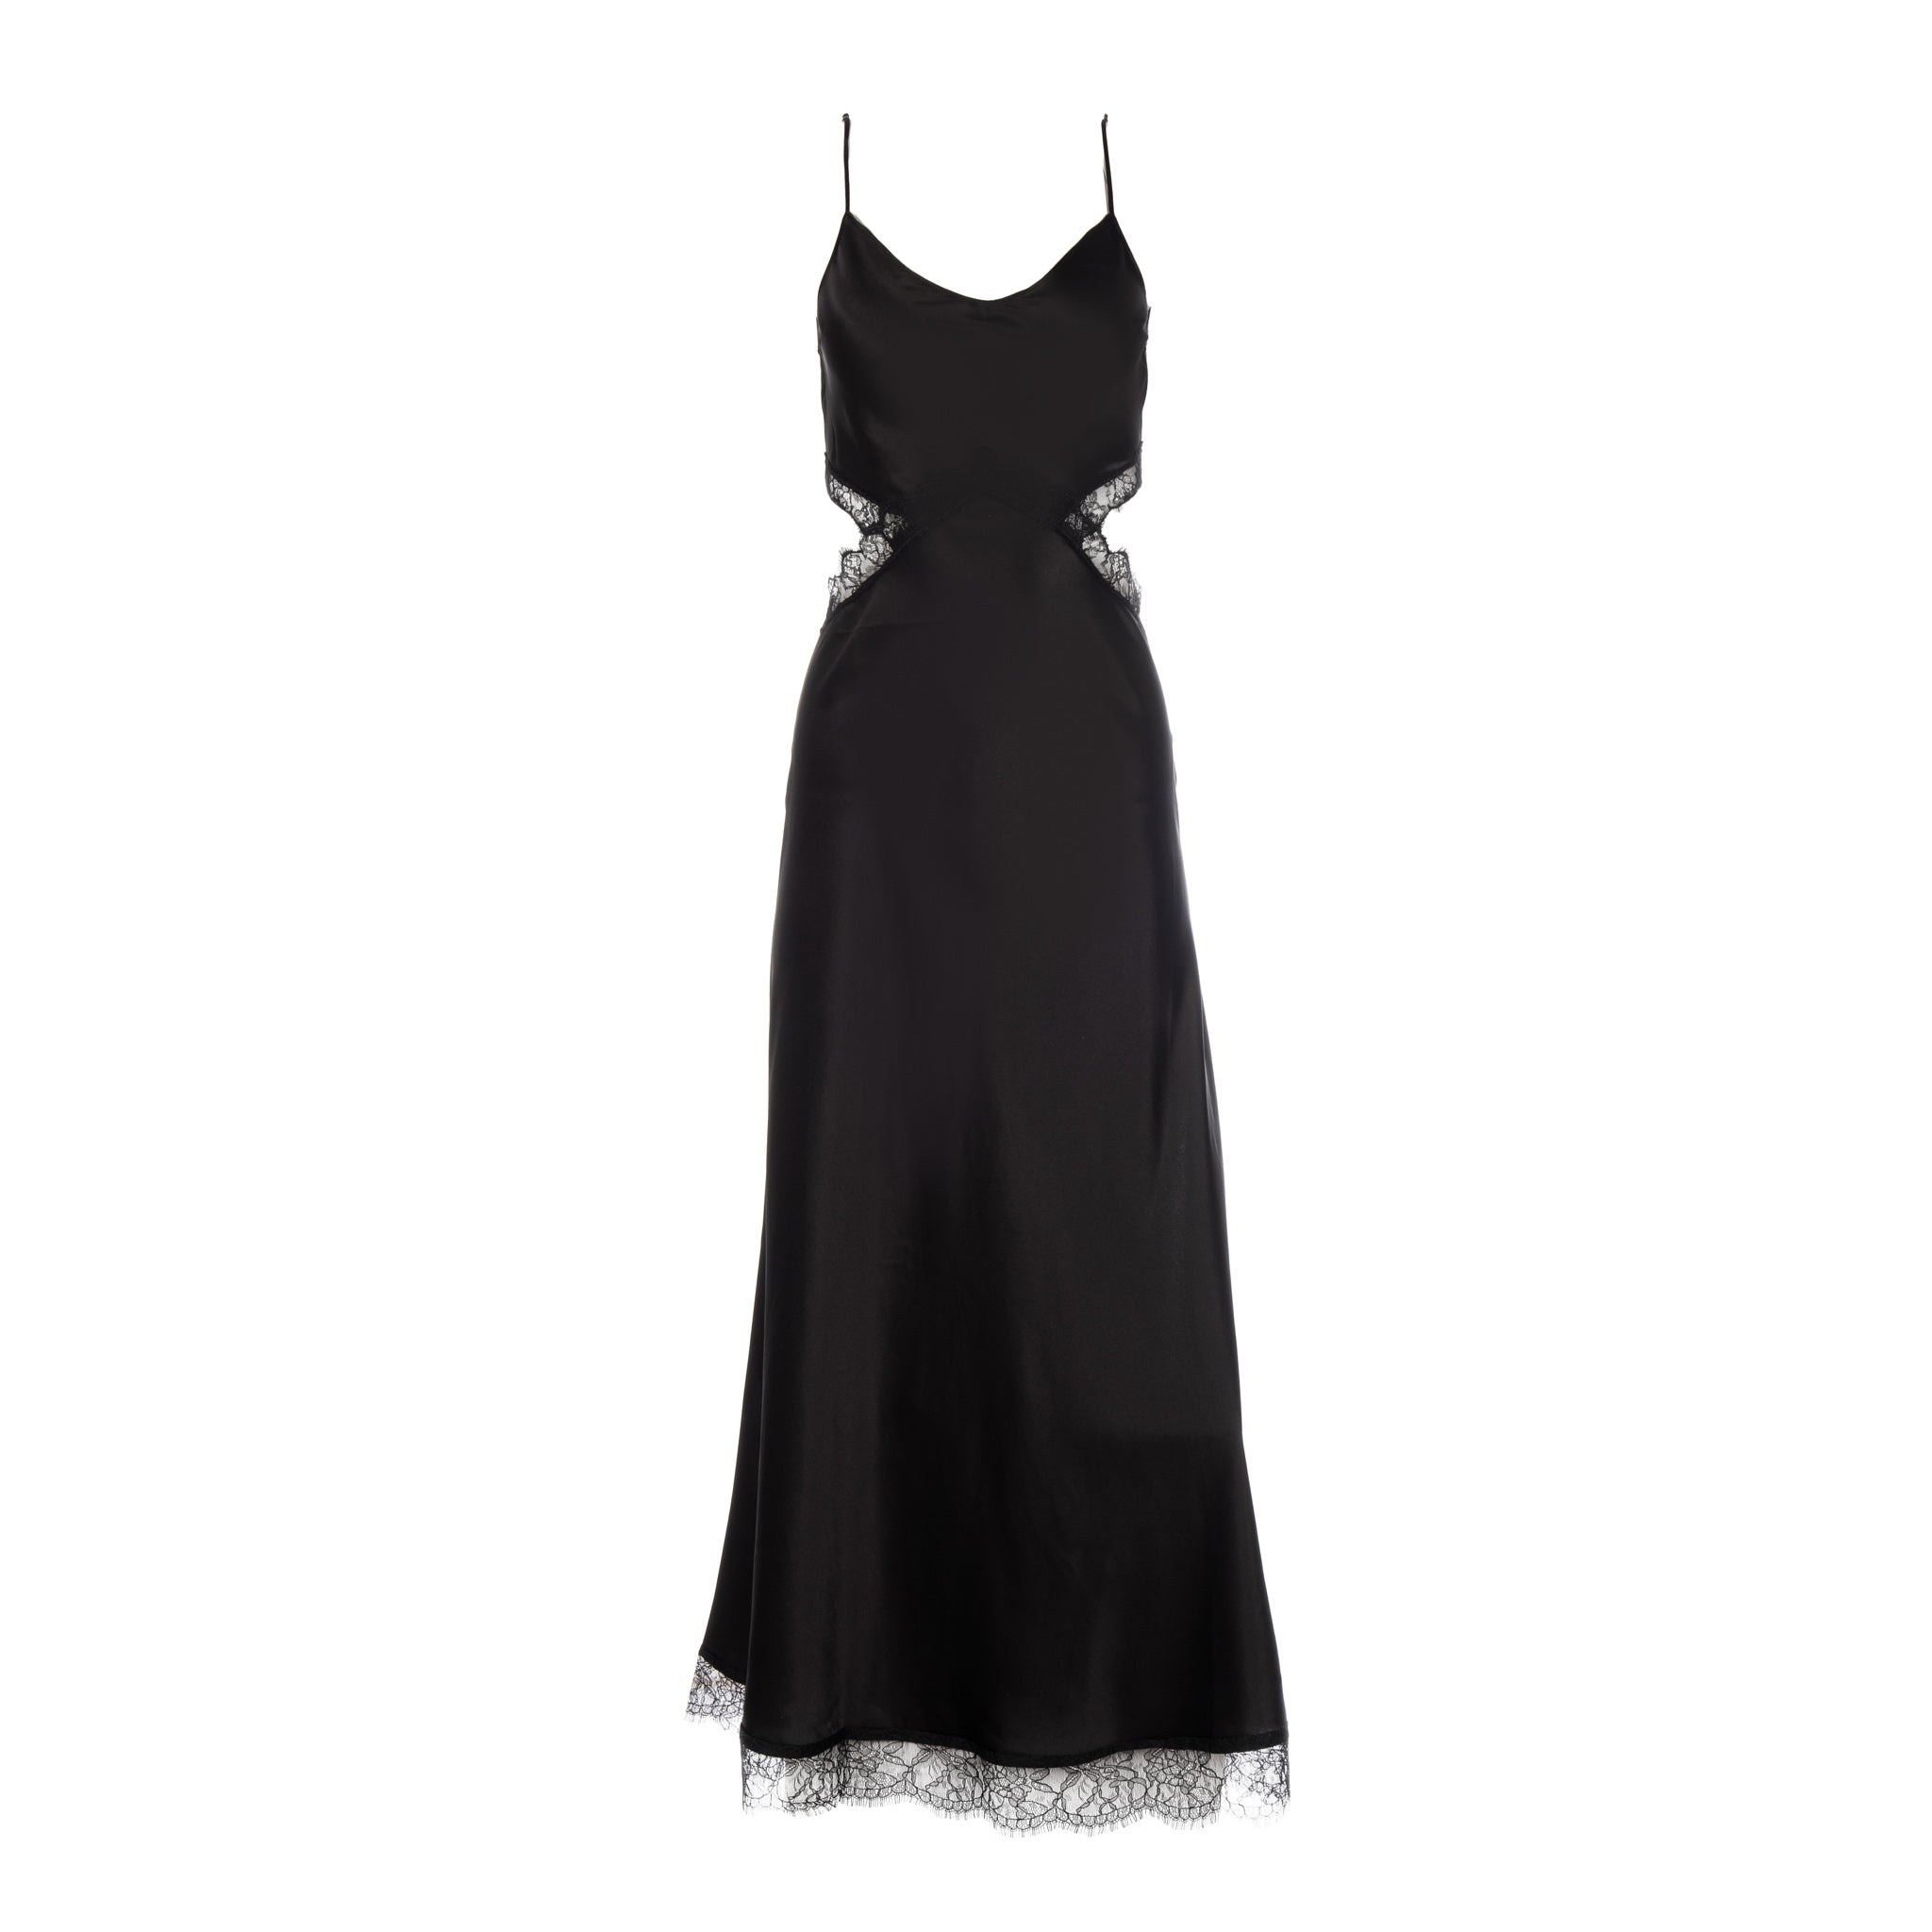 Buy Black Lace Slip Dress from Next France